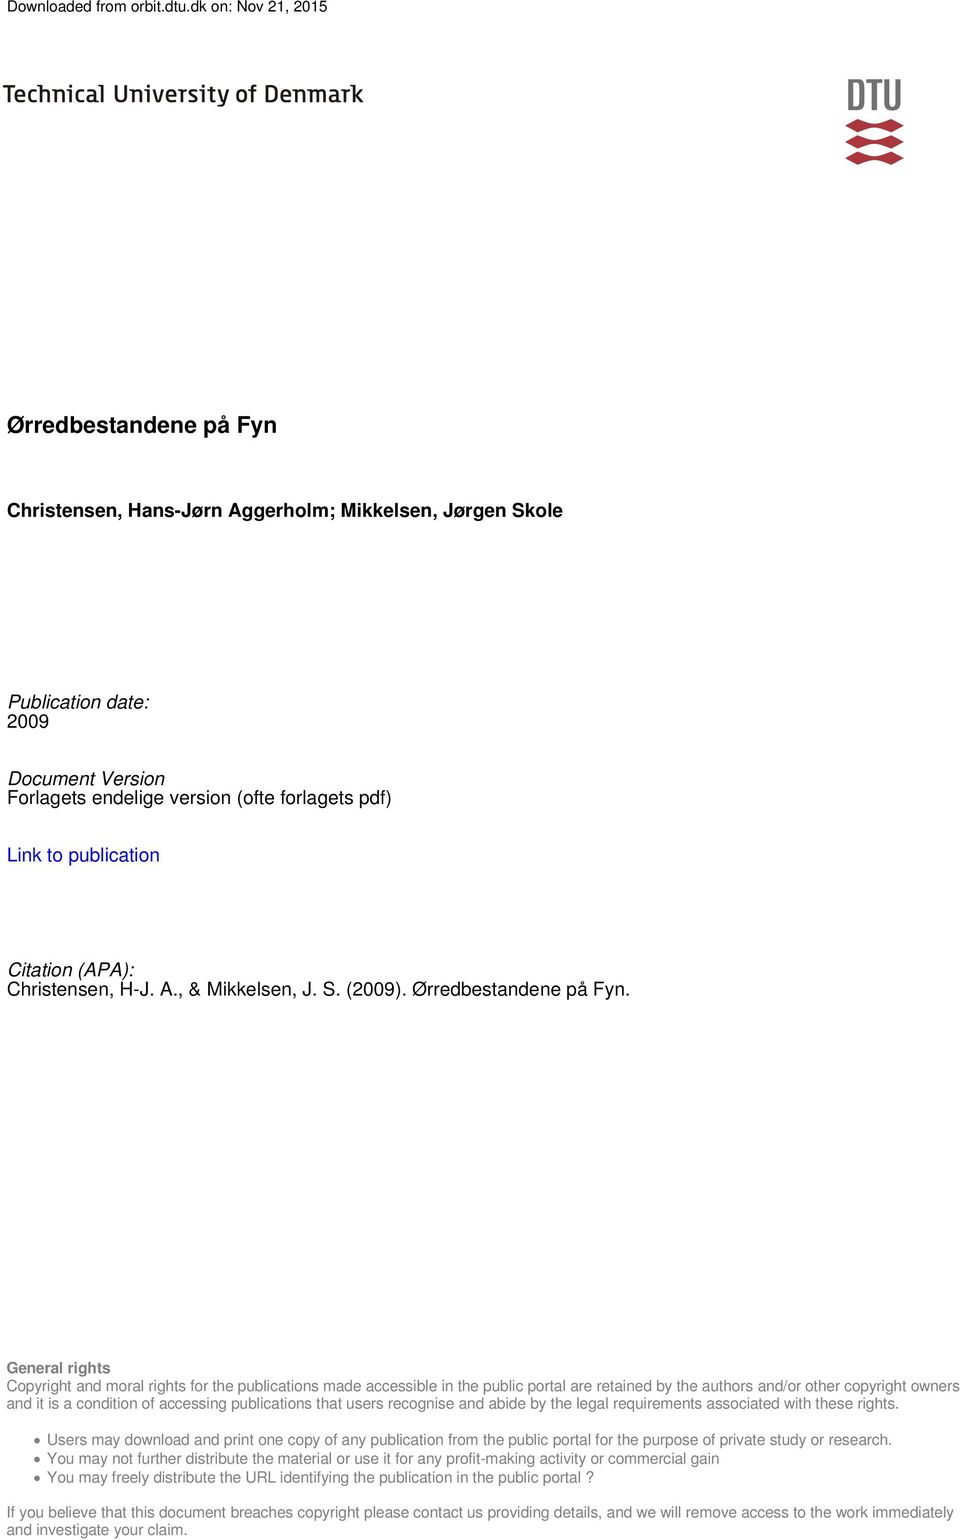 publication Citation (APA): Christensen, H-J. A., & Mikkelsen, J. S. (2009). Ørredbestandene på Fyn.